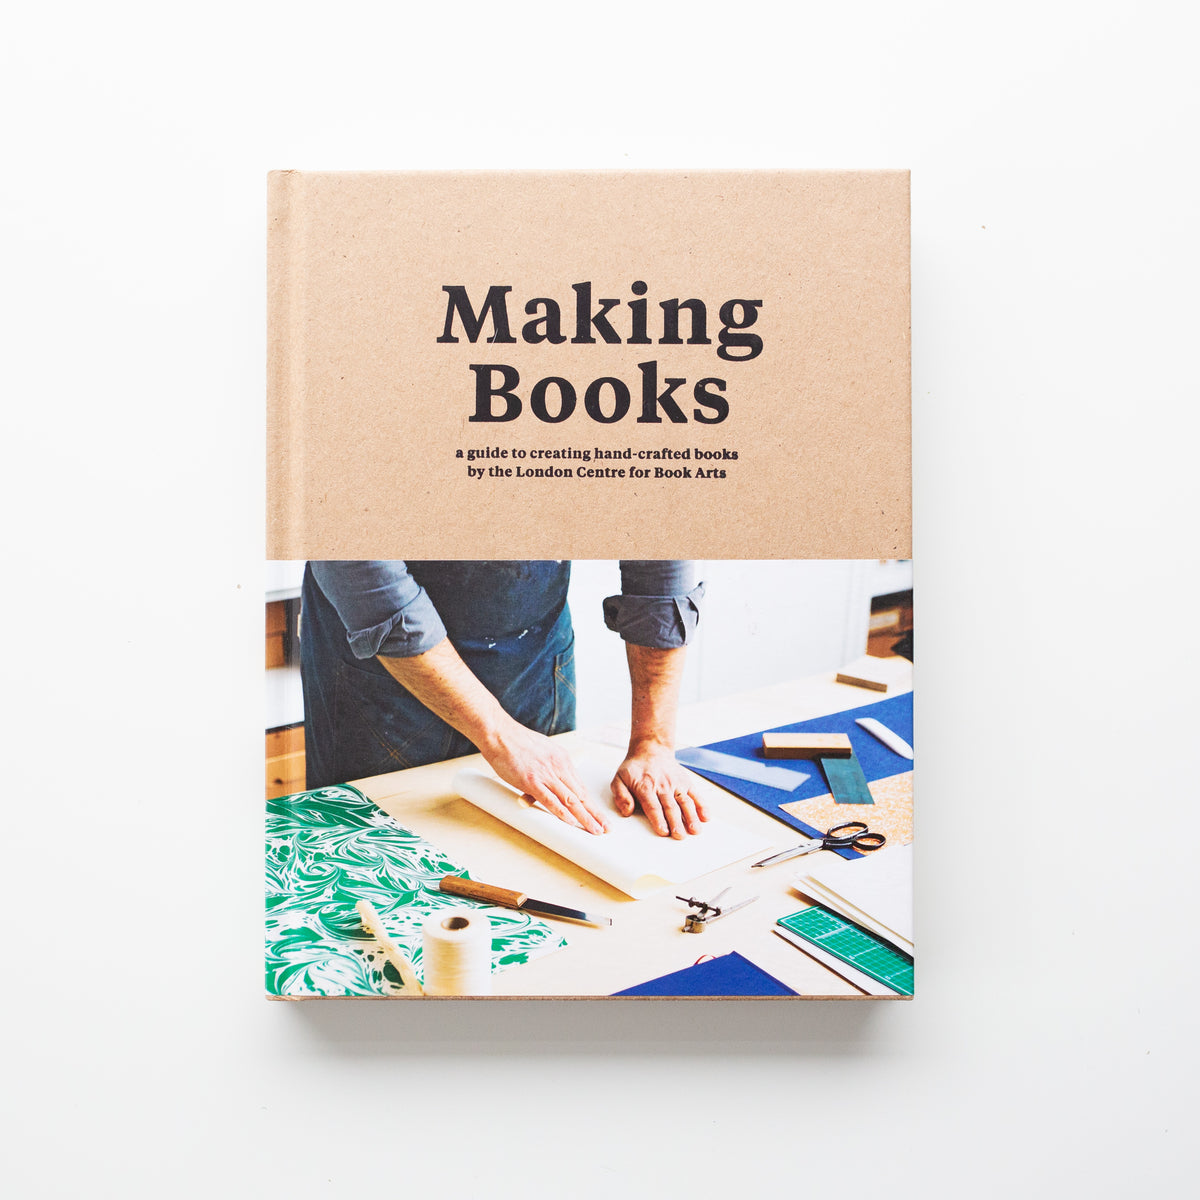 Making books